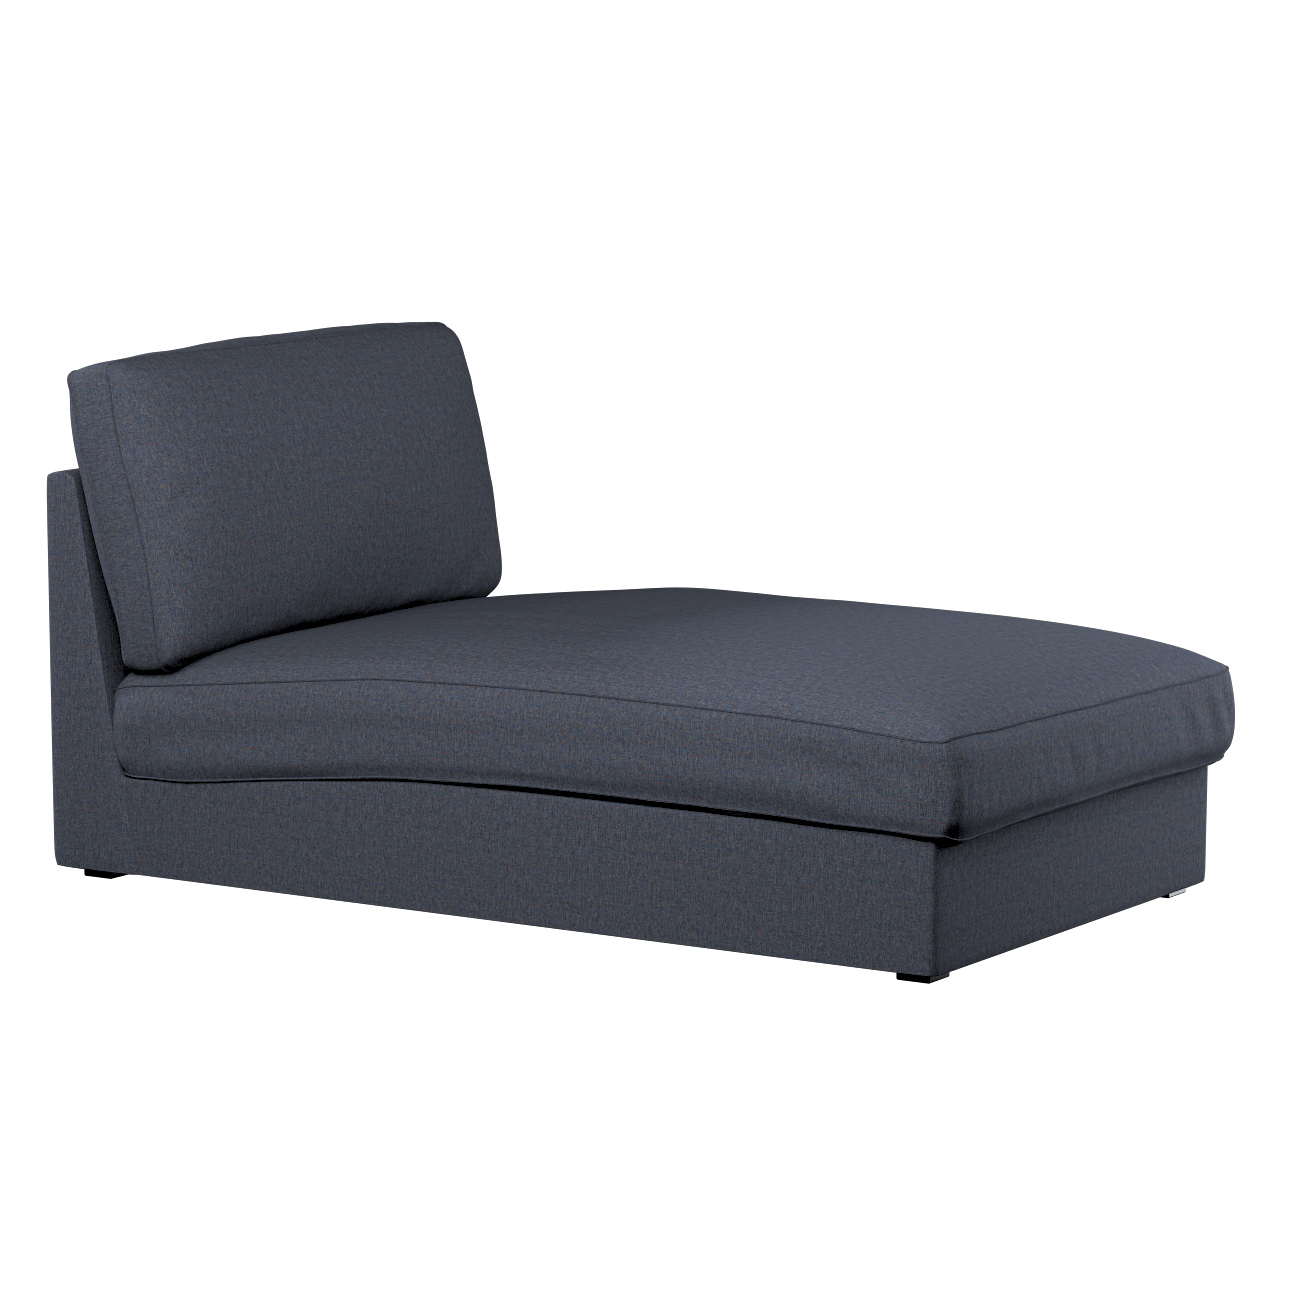 Bezug für Kivik Recamiere Sofa, dunkelblau, Bezug für Kivik Recamiere, Madr günstig online kaufen